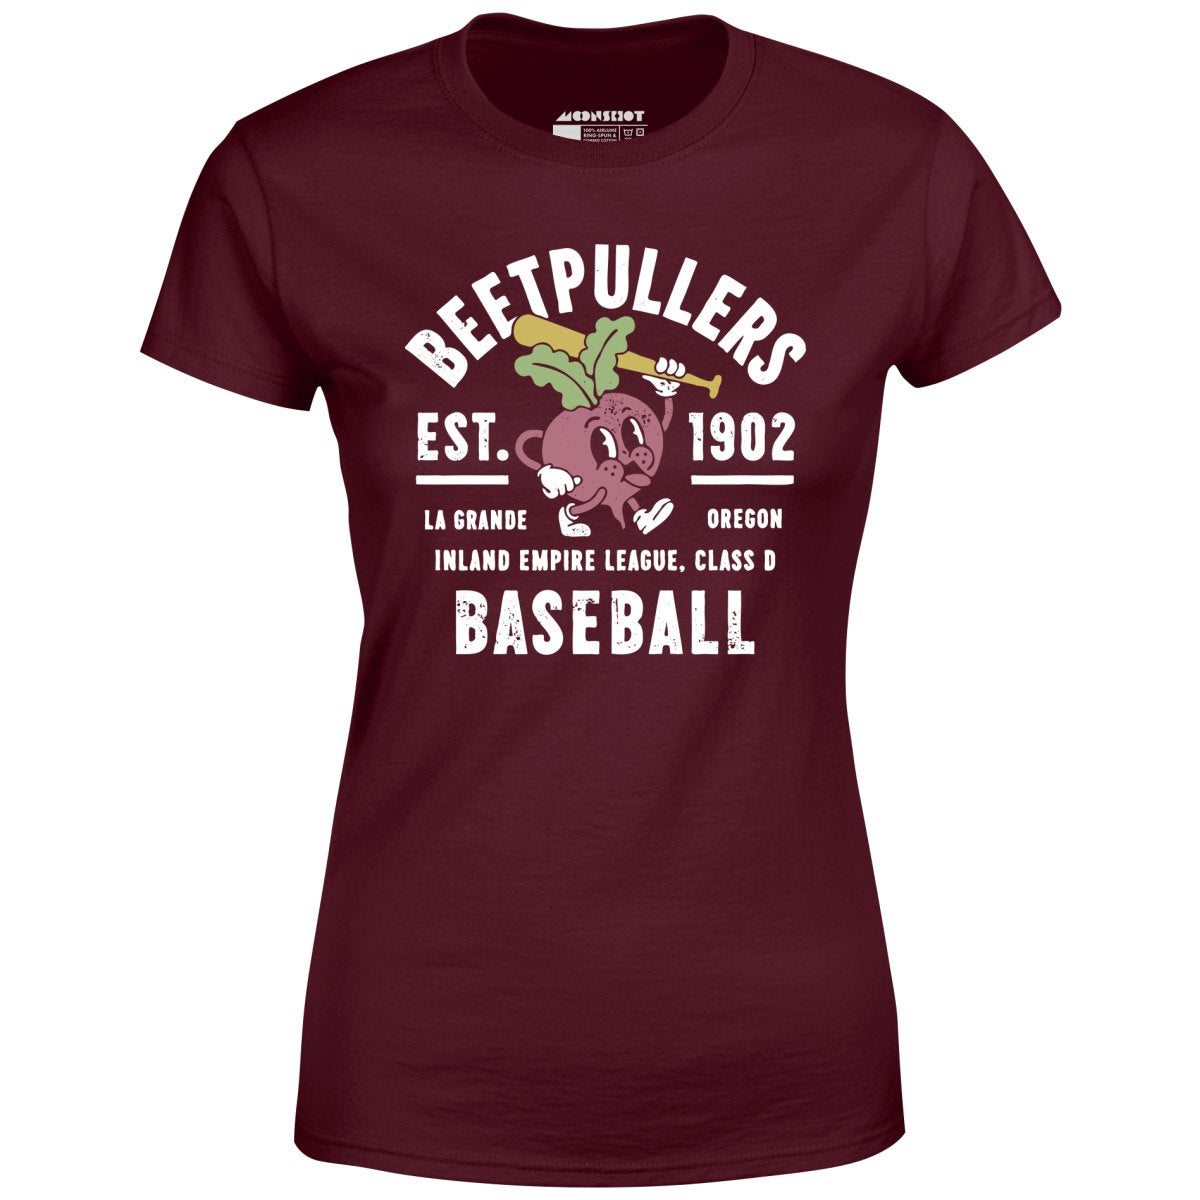 La Grande Beetpullers - Oregon - Vintage Defunct Baseball Teams - Women's T-Shirt